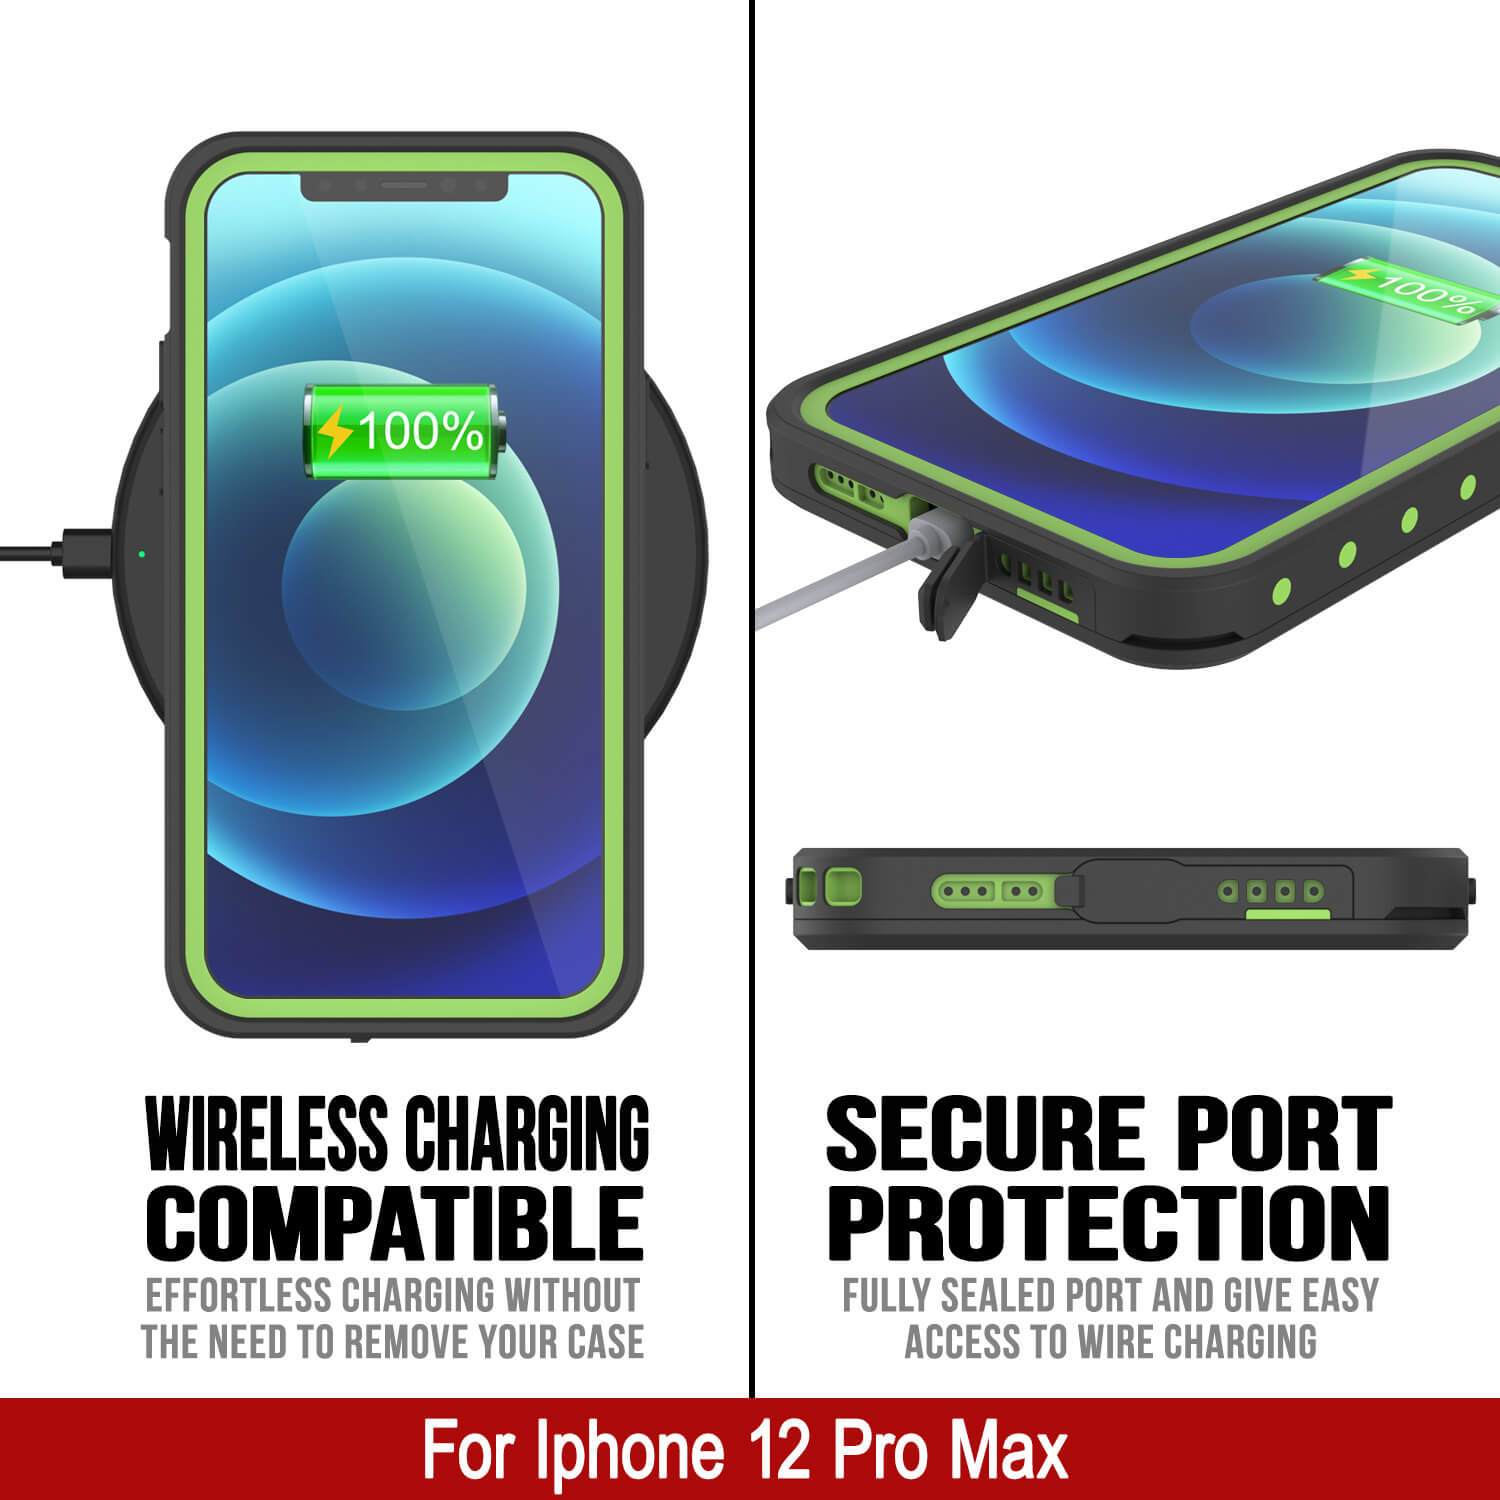 iPhone 12 Pro Max Waterproof IP68 Case, Punkcase [Light green] [StudStar Series] [Slim Fit] [Dirtproof]